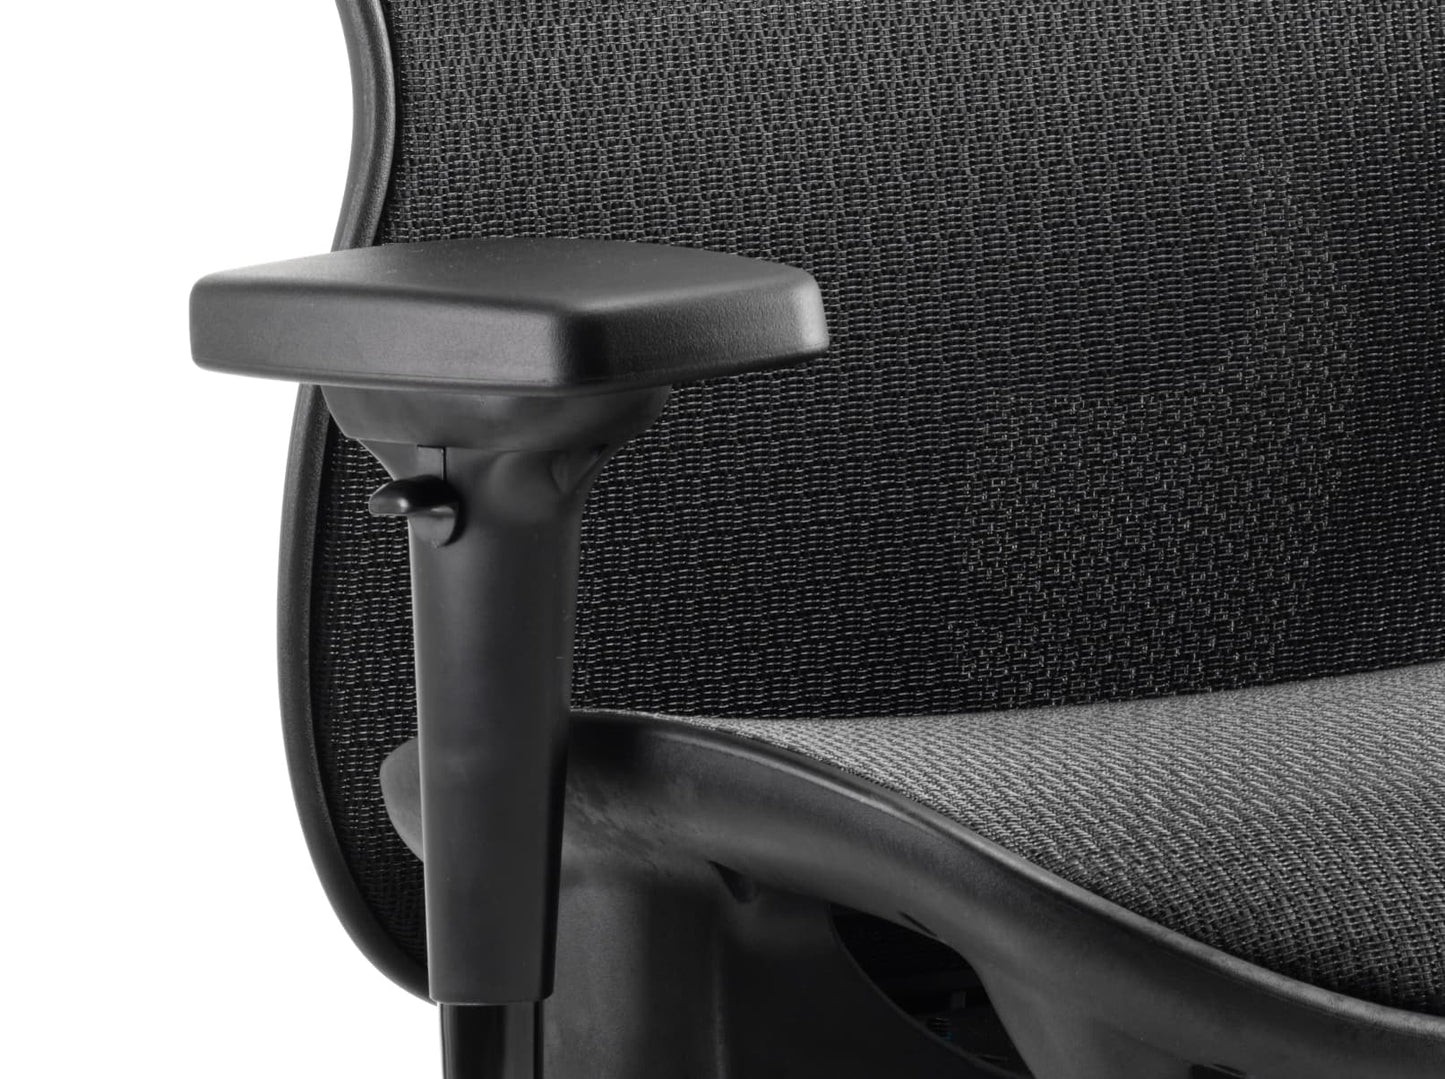 Stealth Posture Chair